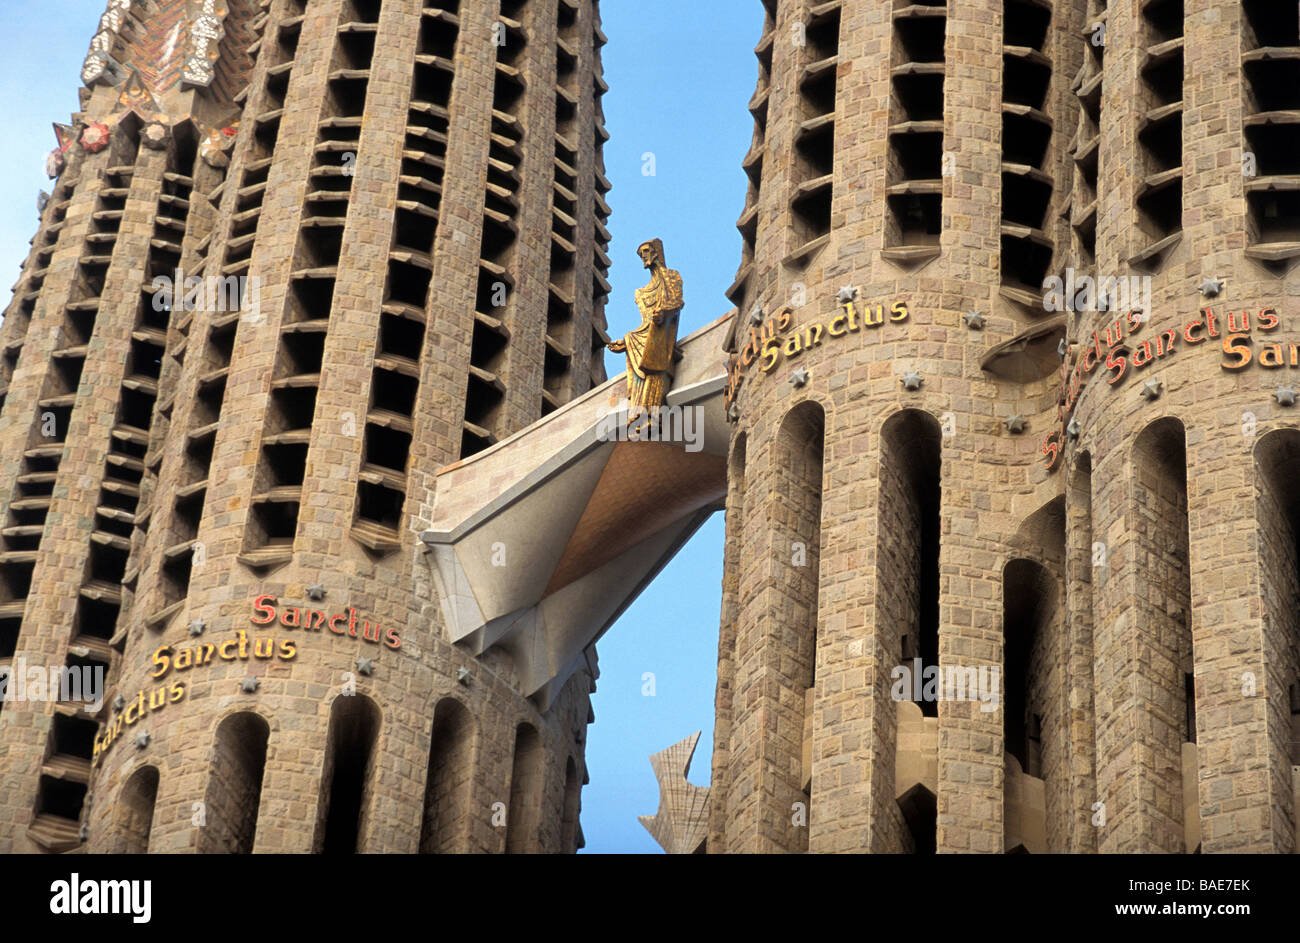 Risen Christ as a gold figure, Passion facade of the Sagrada Familia, Barcelona, Catalonia, Spain, Europe Stock Photo